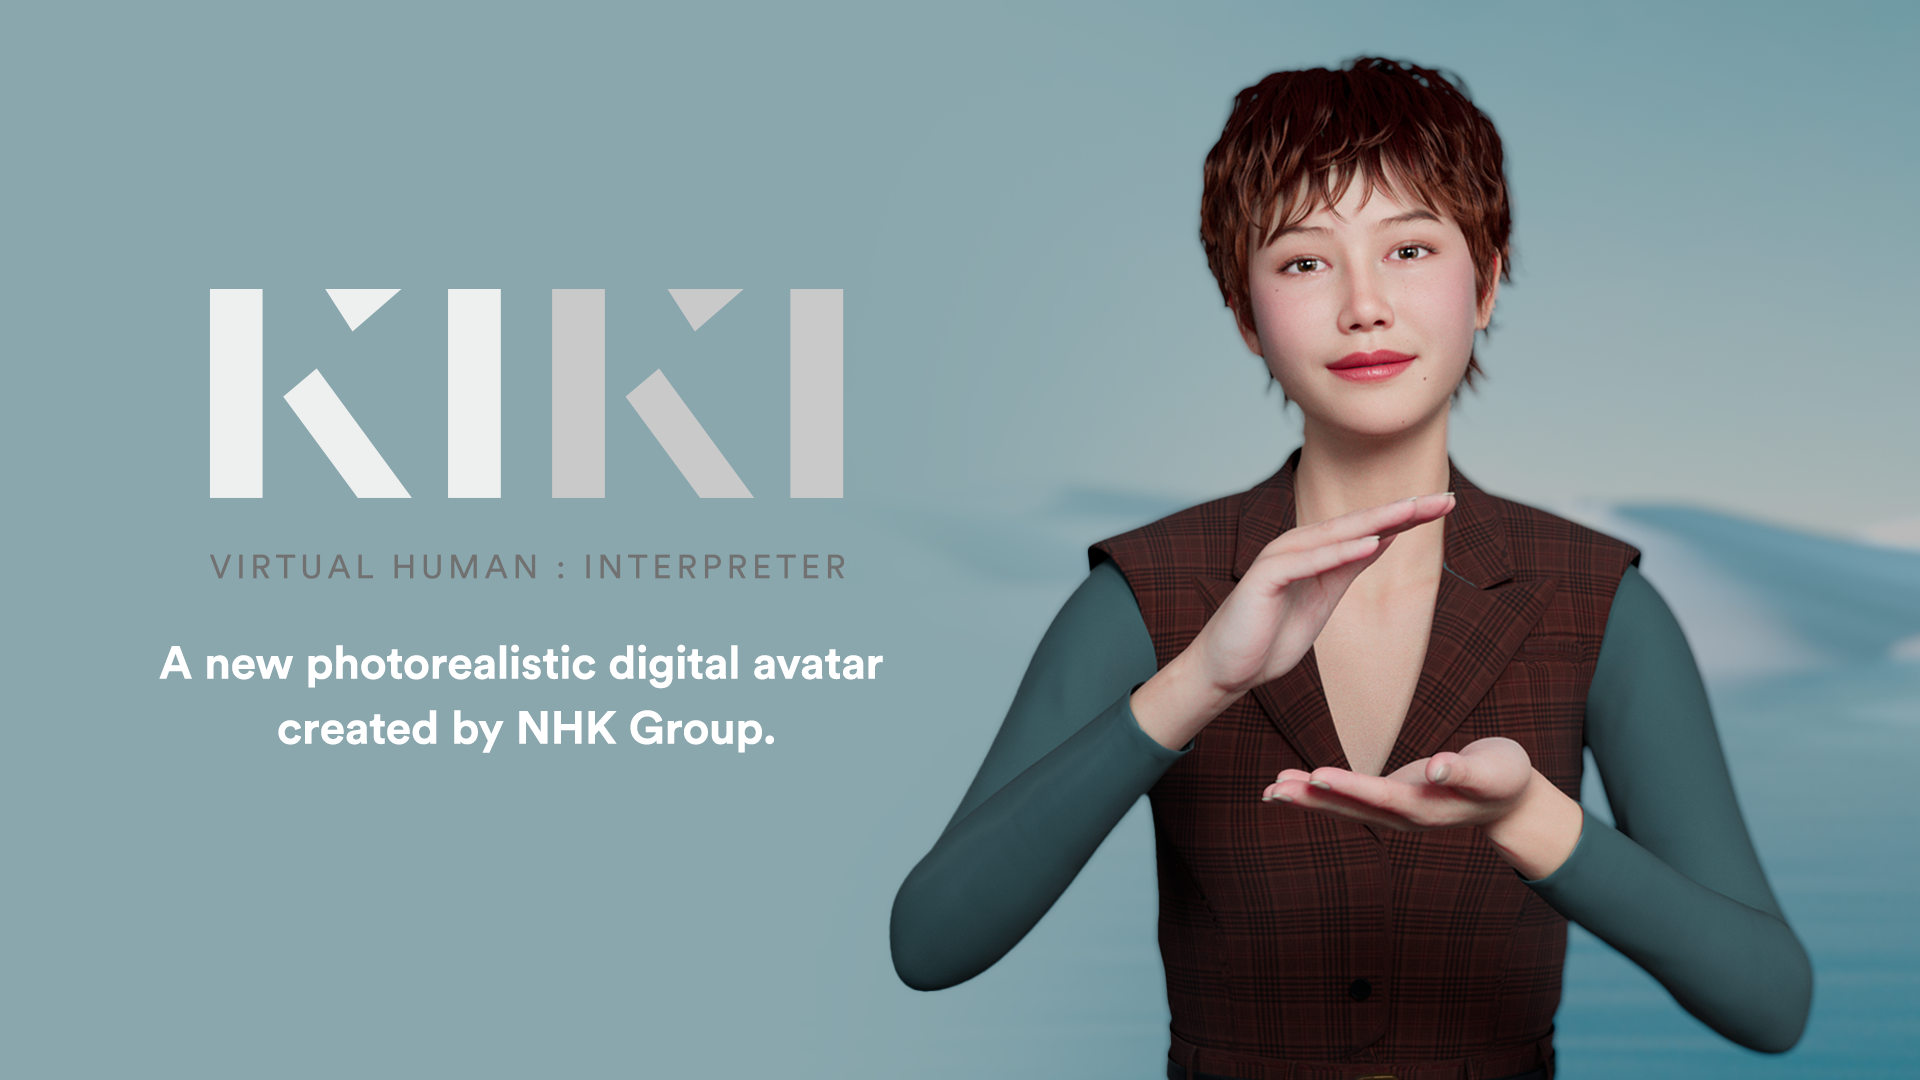 KIKI VIRTUAL HUMAN : INTERPRETER  A new photorealistic digital avatar created by NHK Group.